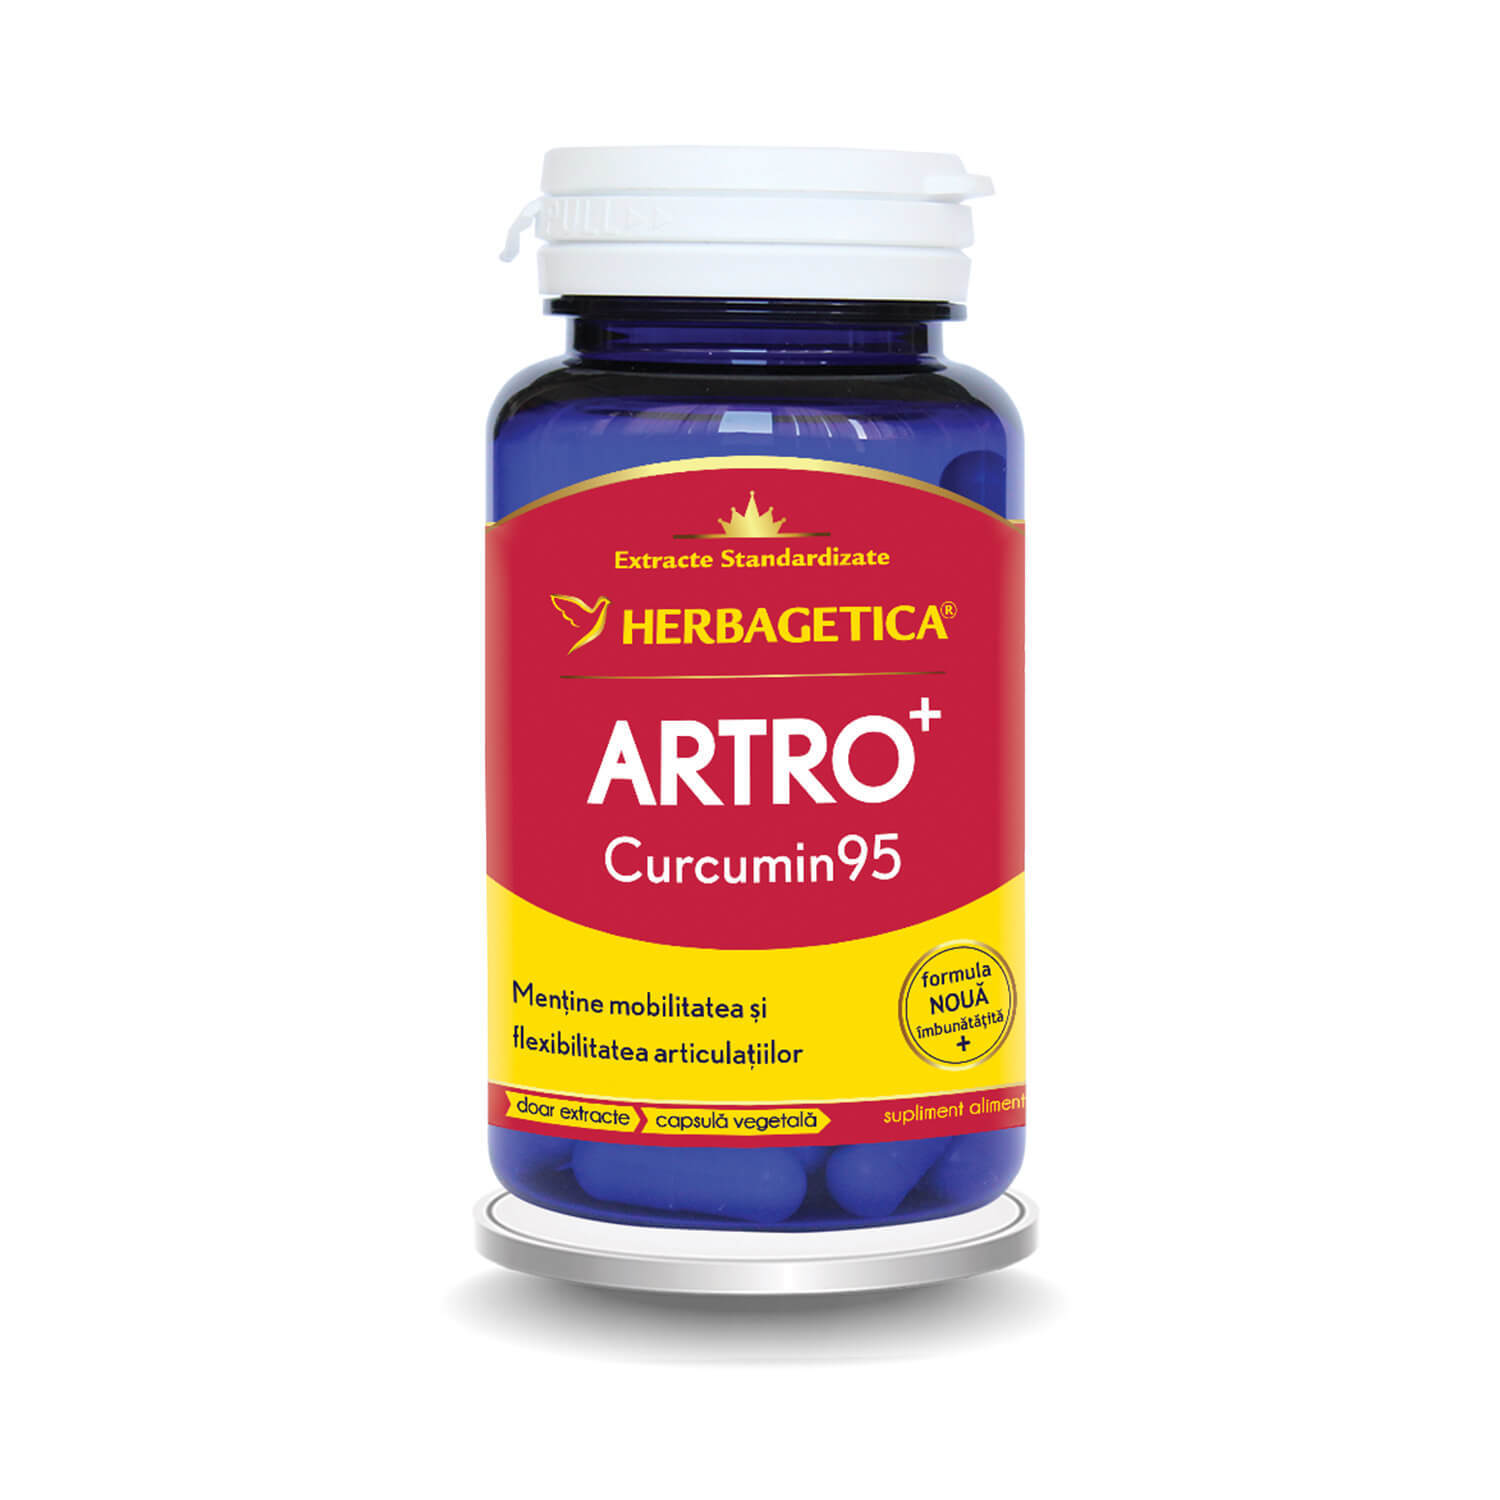 Artro+ Curcumin95, 60 capsule, Herbagetica Vitamine si suplimente